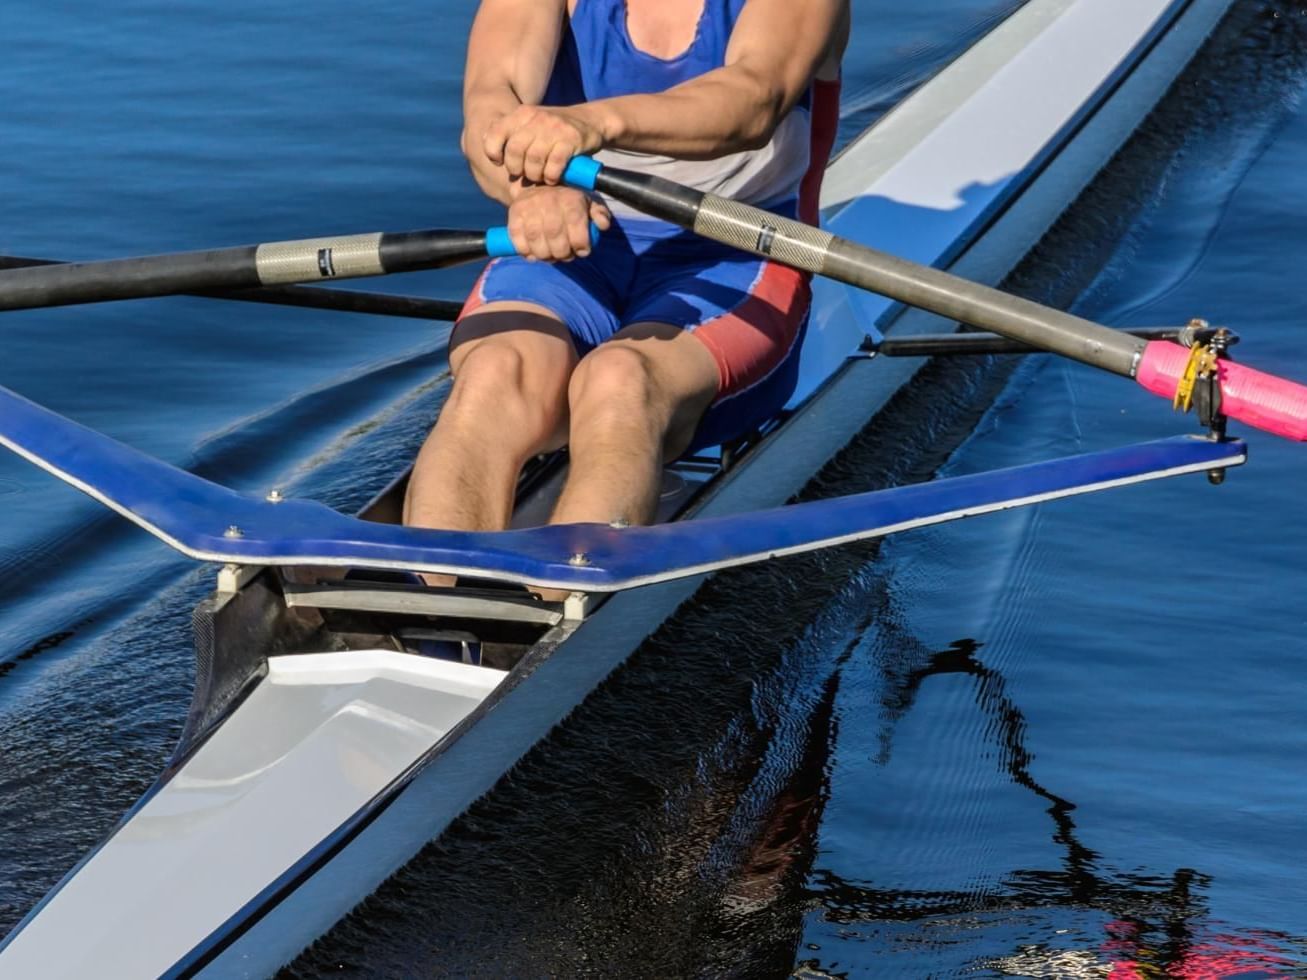 Rowing at dorney lake in Windsor